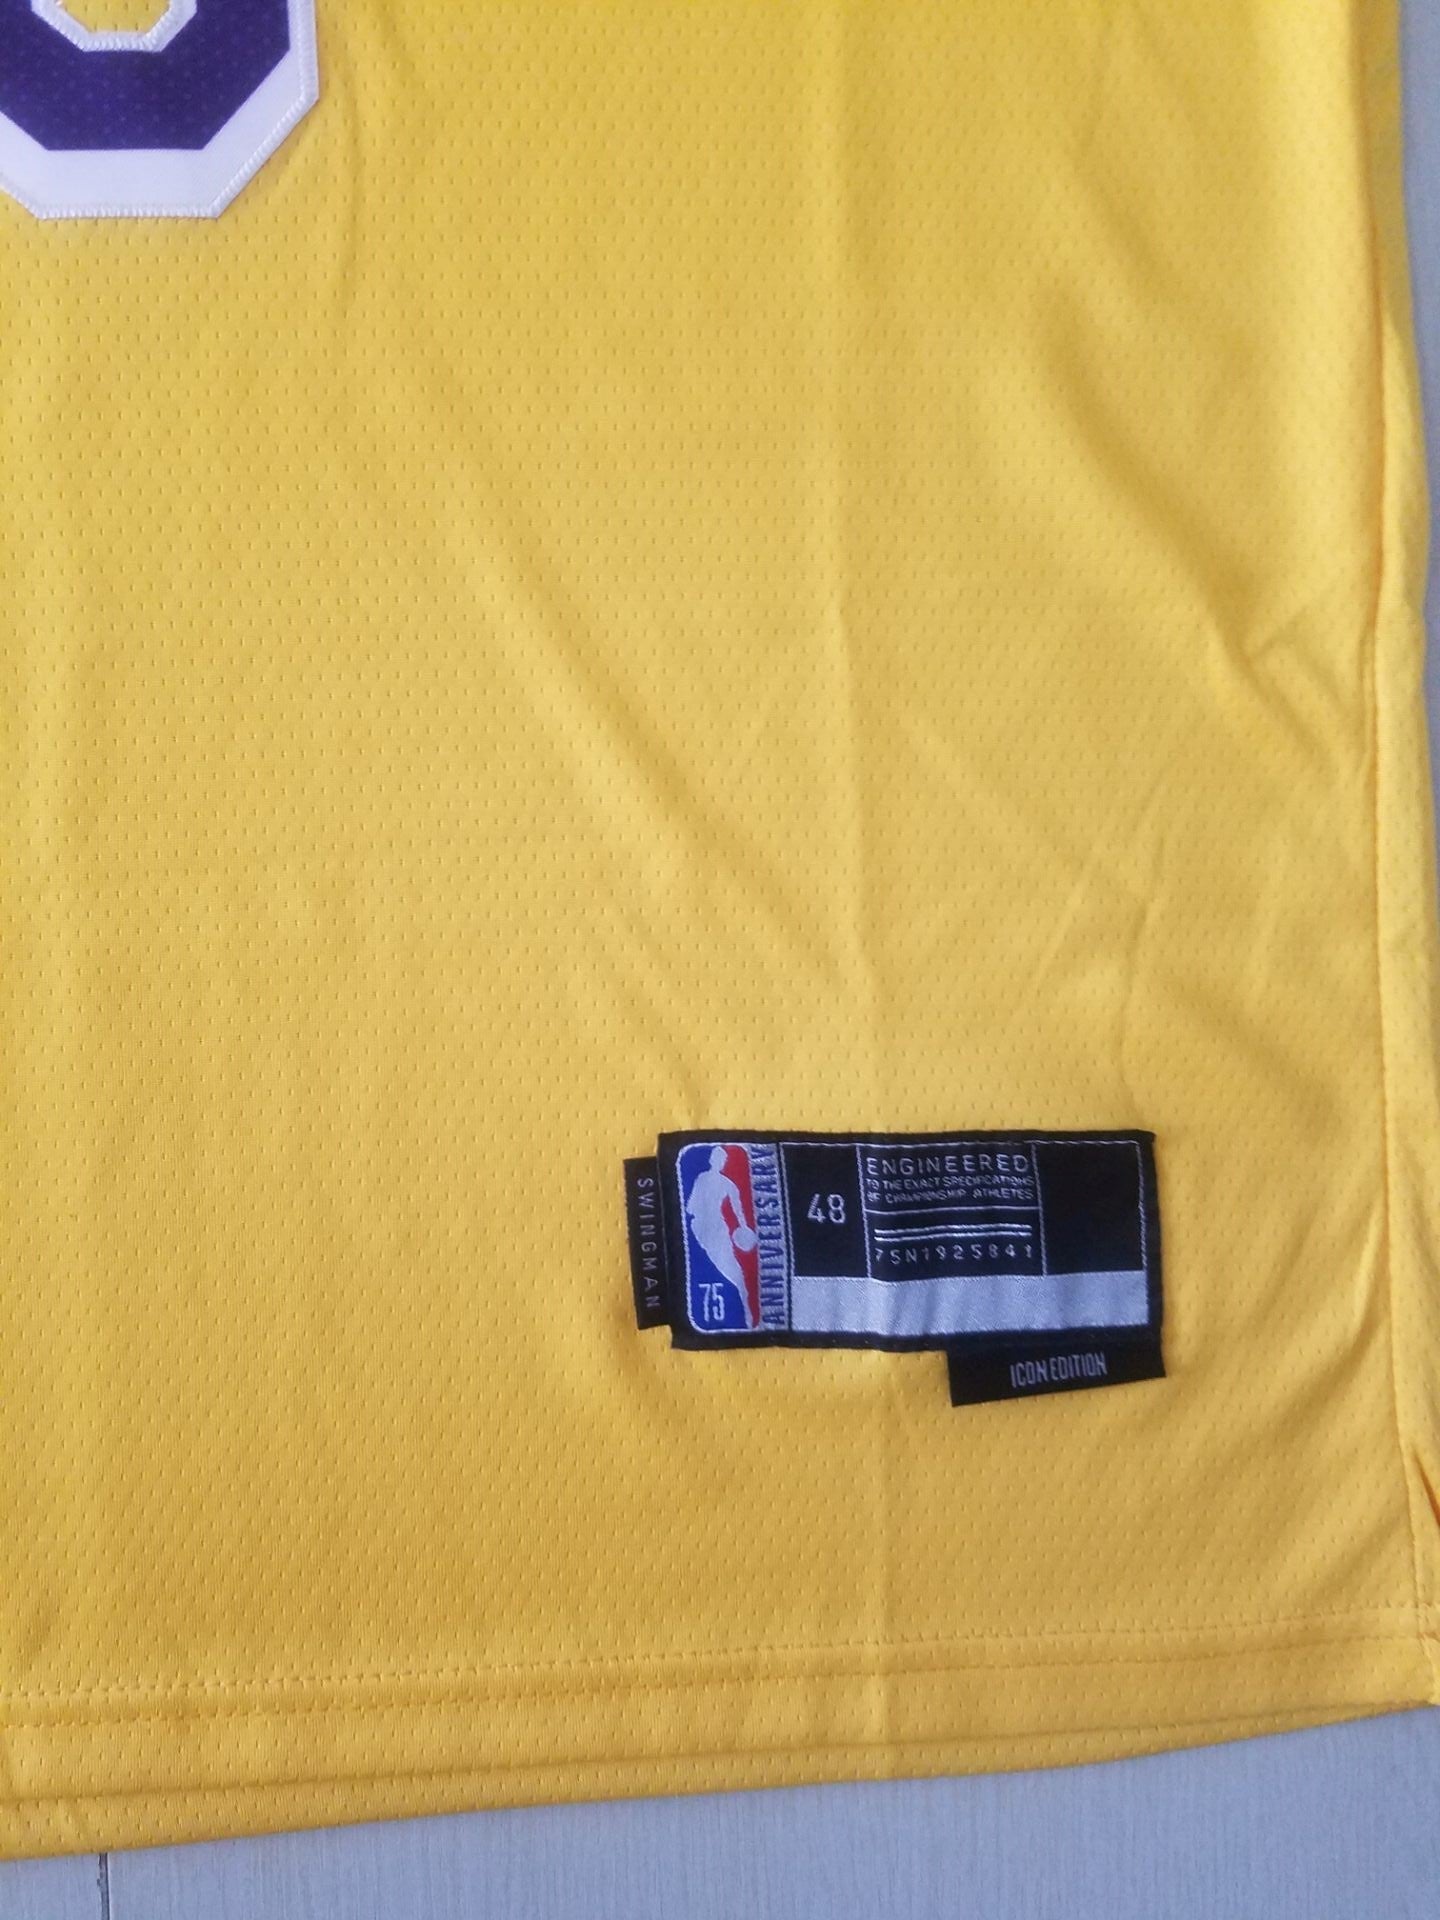 Men's Los Angeles Lakers LeBron James #6 NBA Yellow Jersey